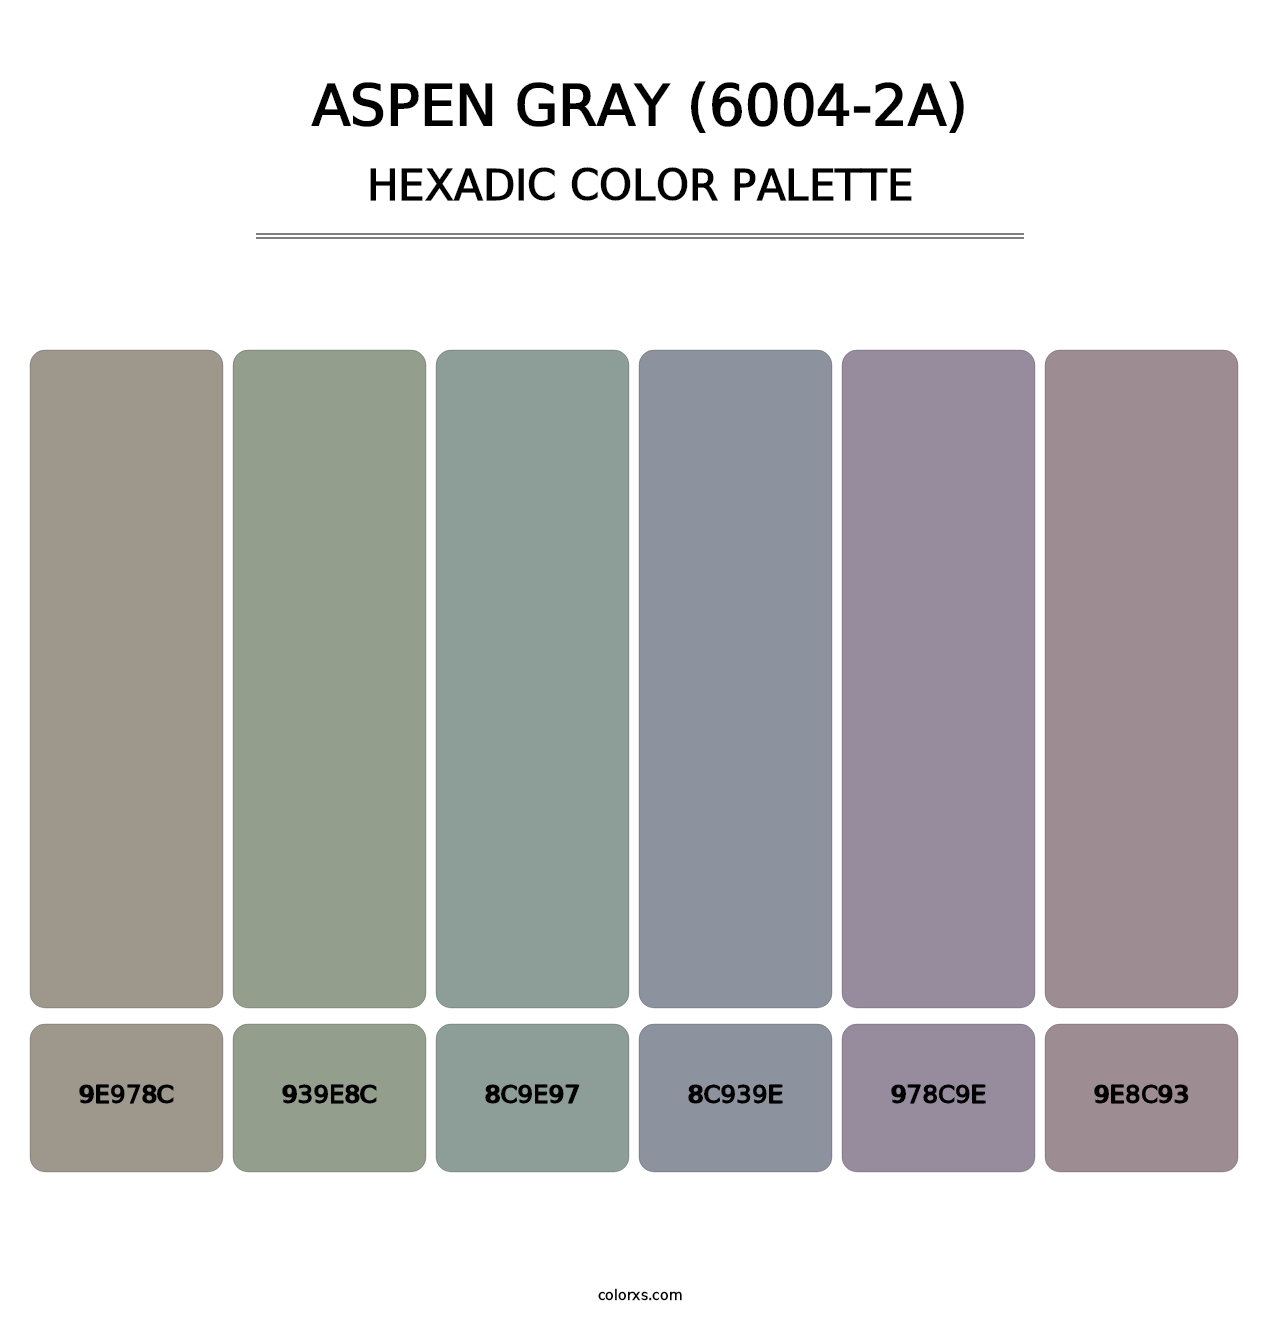 Aspen Gray (6004-2A) - Hexadic Color Palette